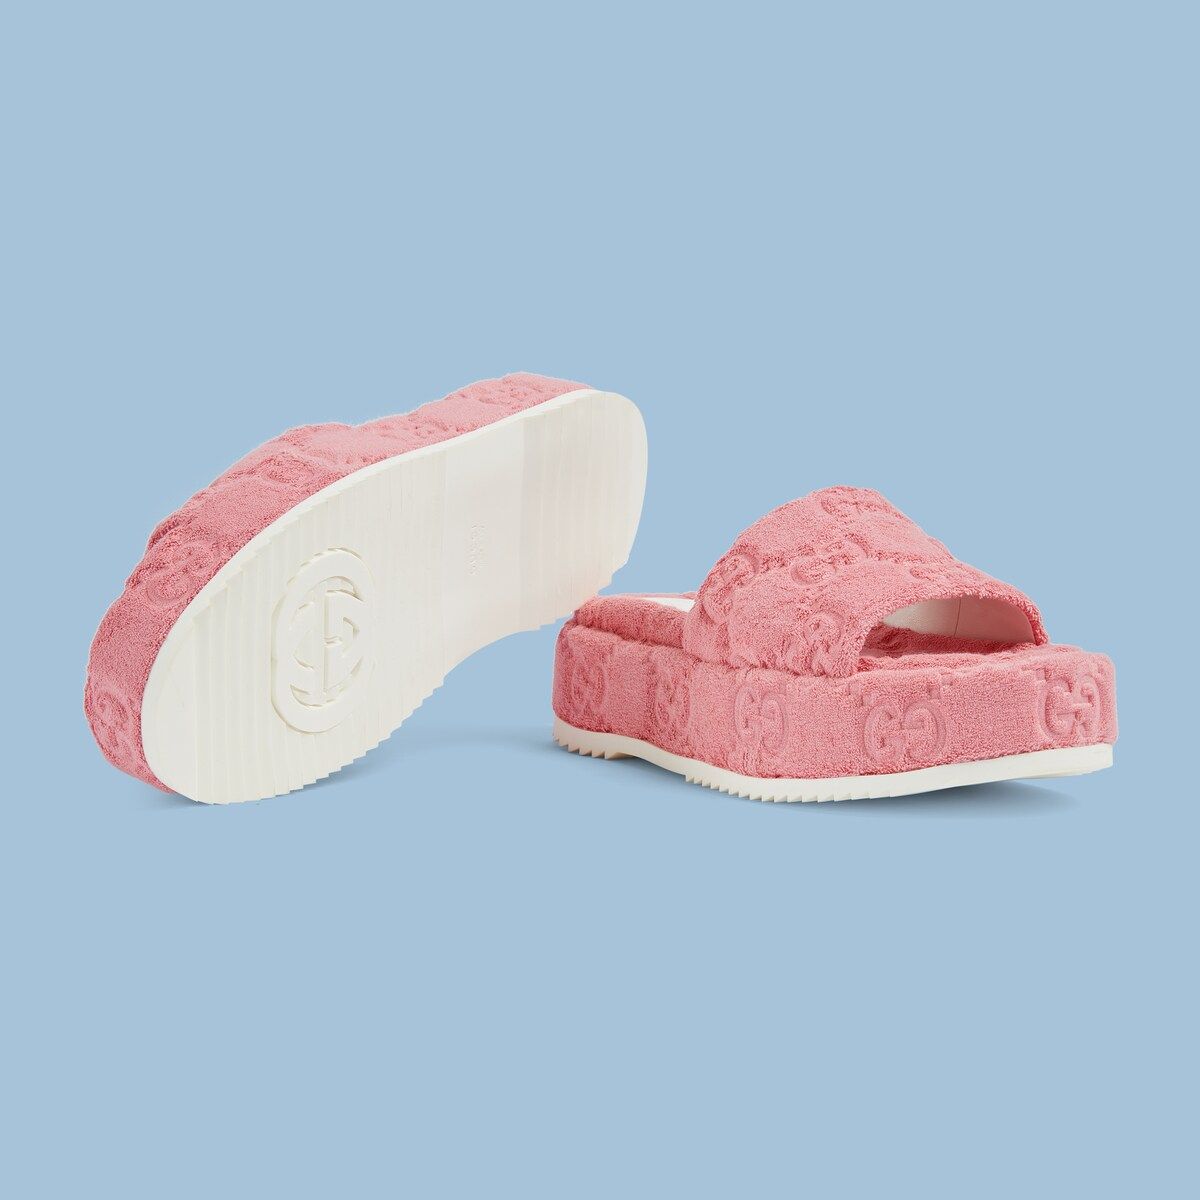 Gucci Women's GG platform sandal | Gucci (US)